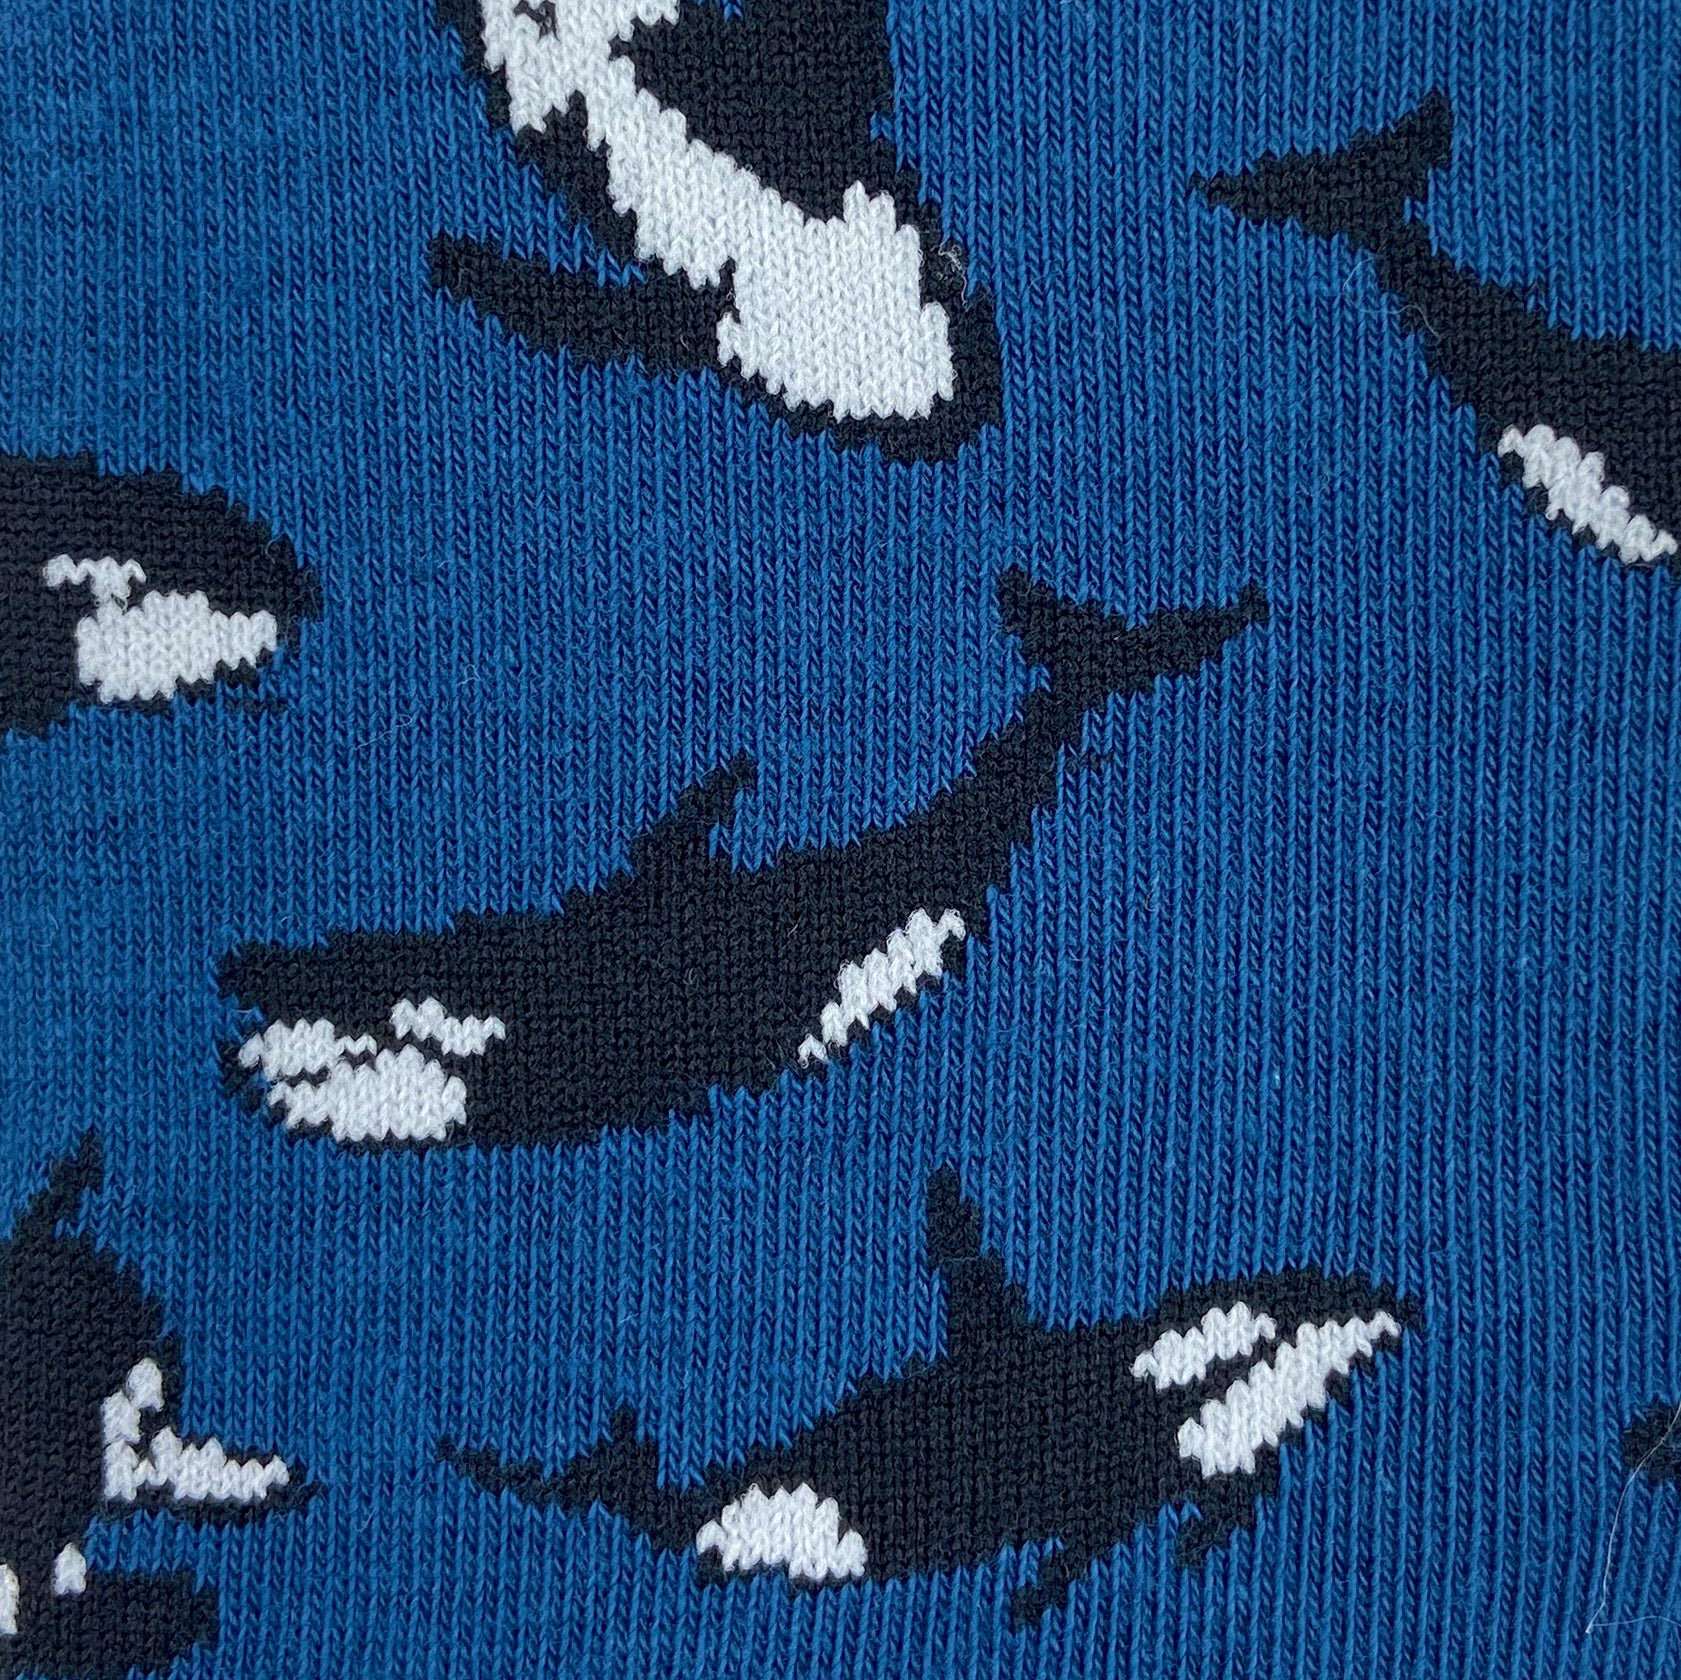 Classic Navy Blue Sea Creatures Themed Killer Whale Ocra Novelty Socks